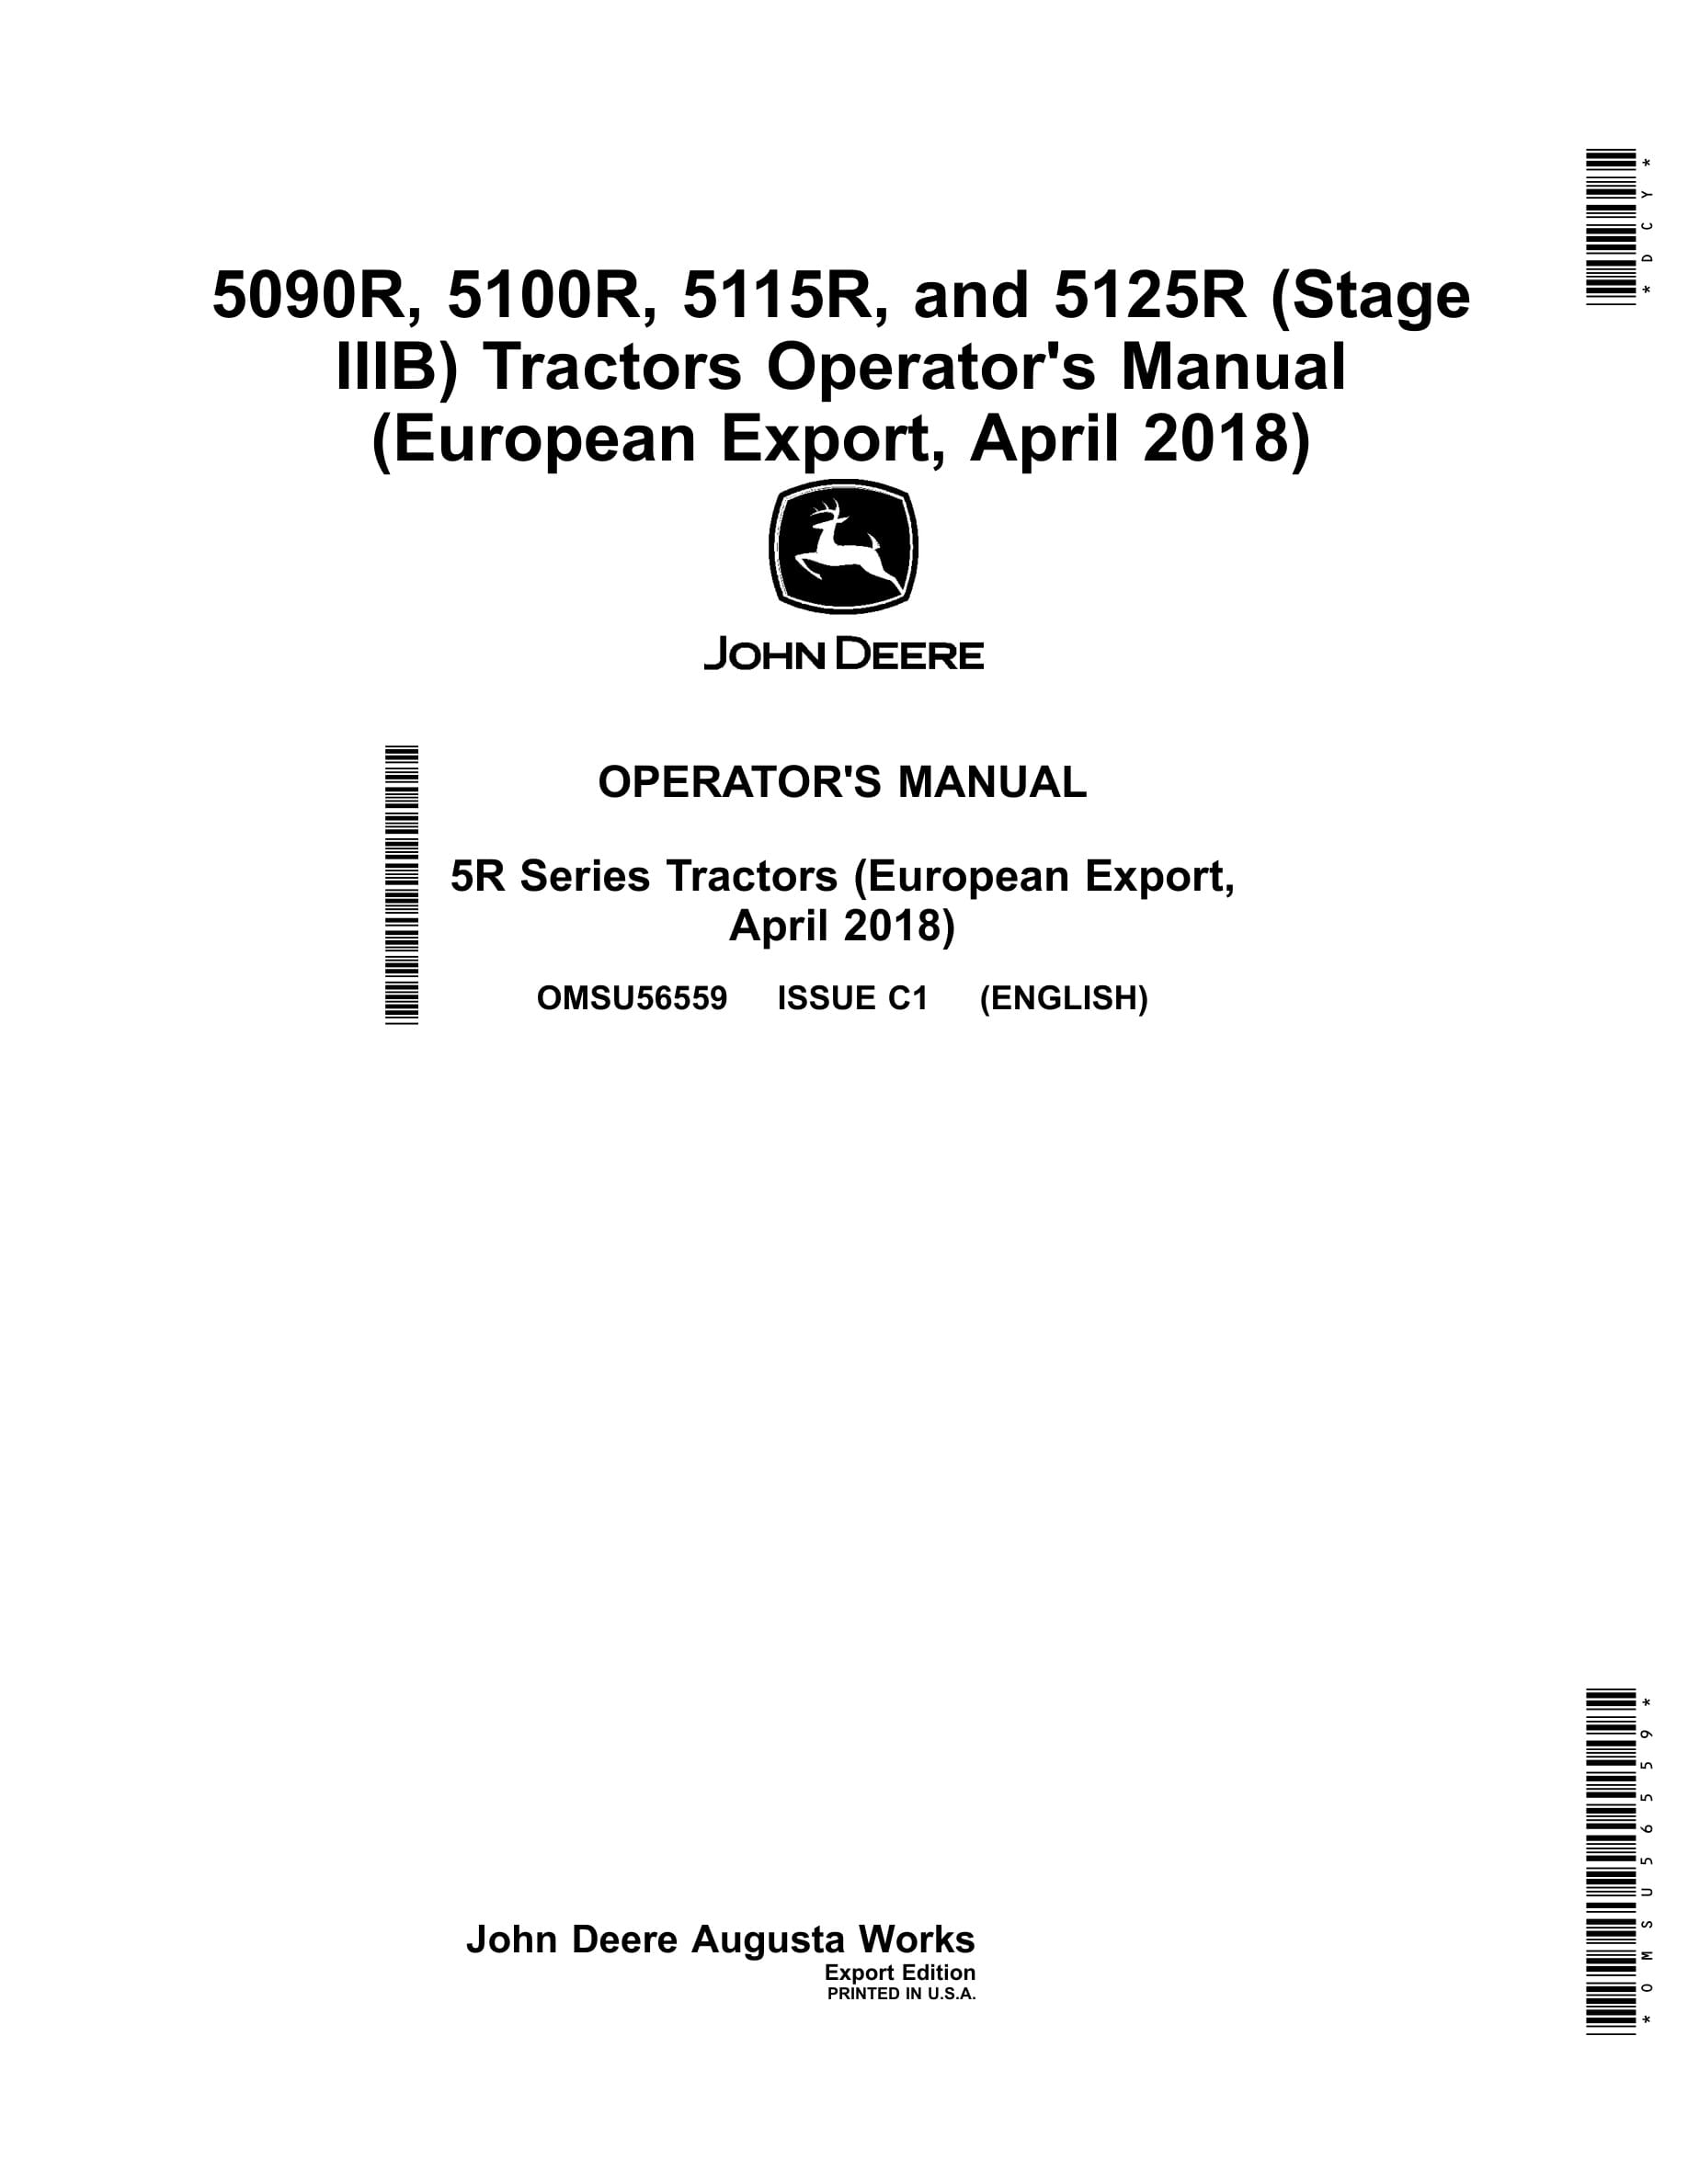 John Deere 5090r, 5100r, 5115r, And 5125r (stage Iiib) Tractors Operator Manuals OMSU56559-1